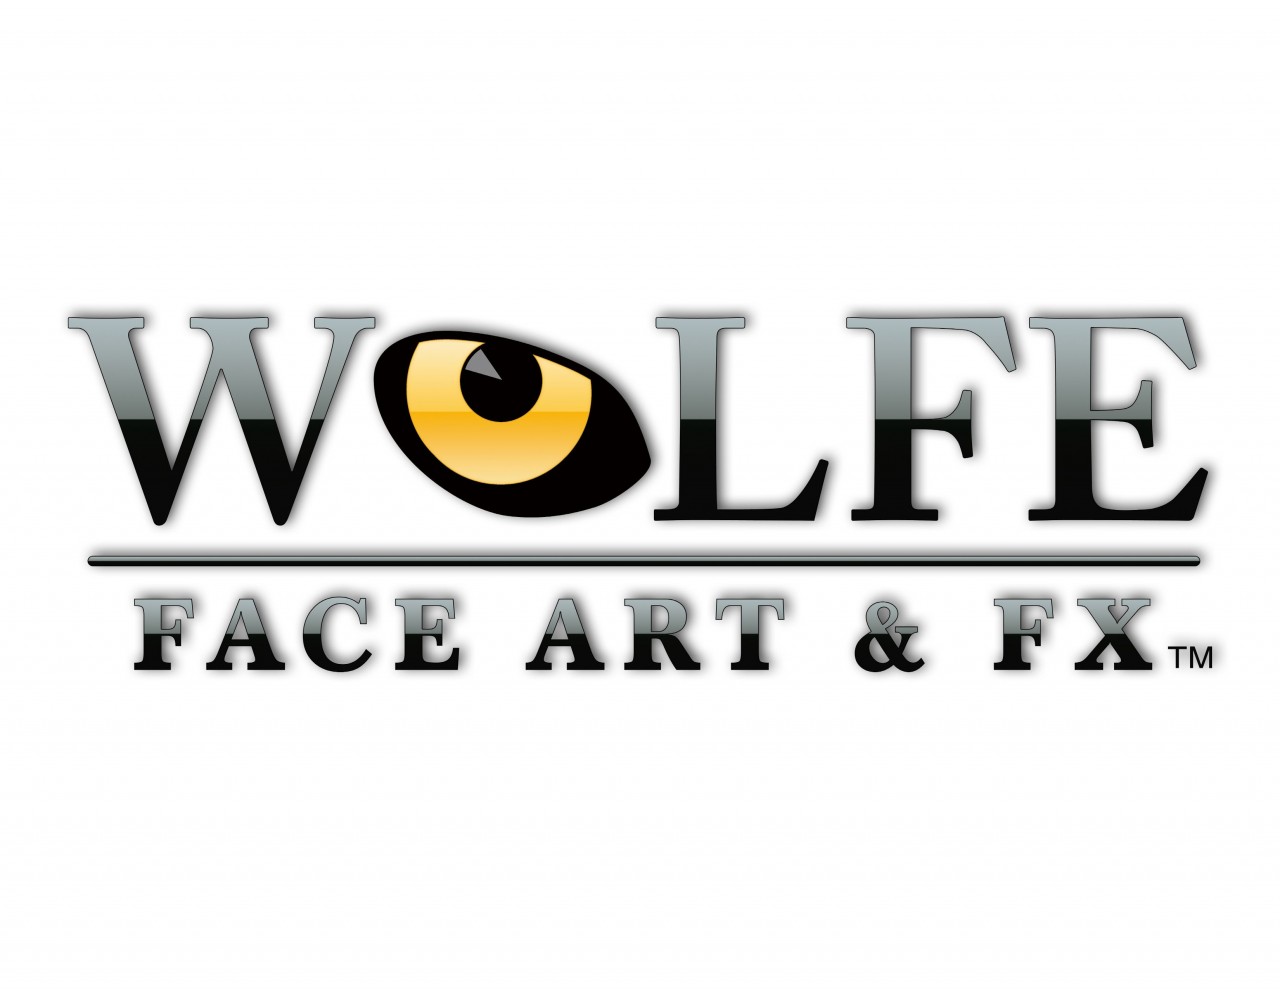 6 Color Monster Palette Wolfe Face Art & FX